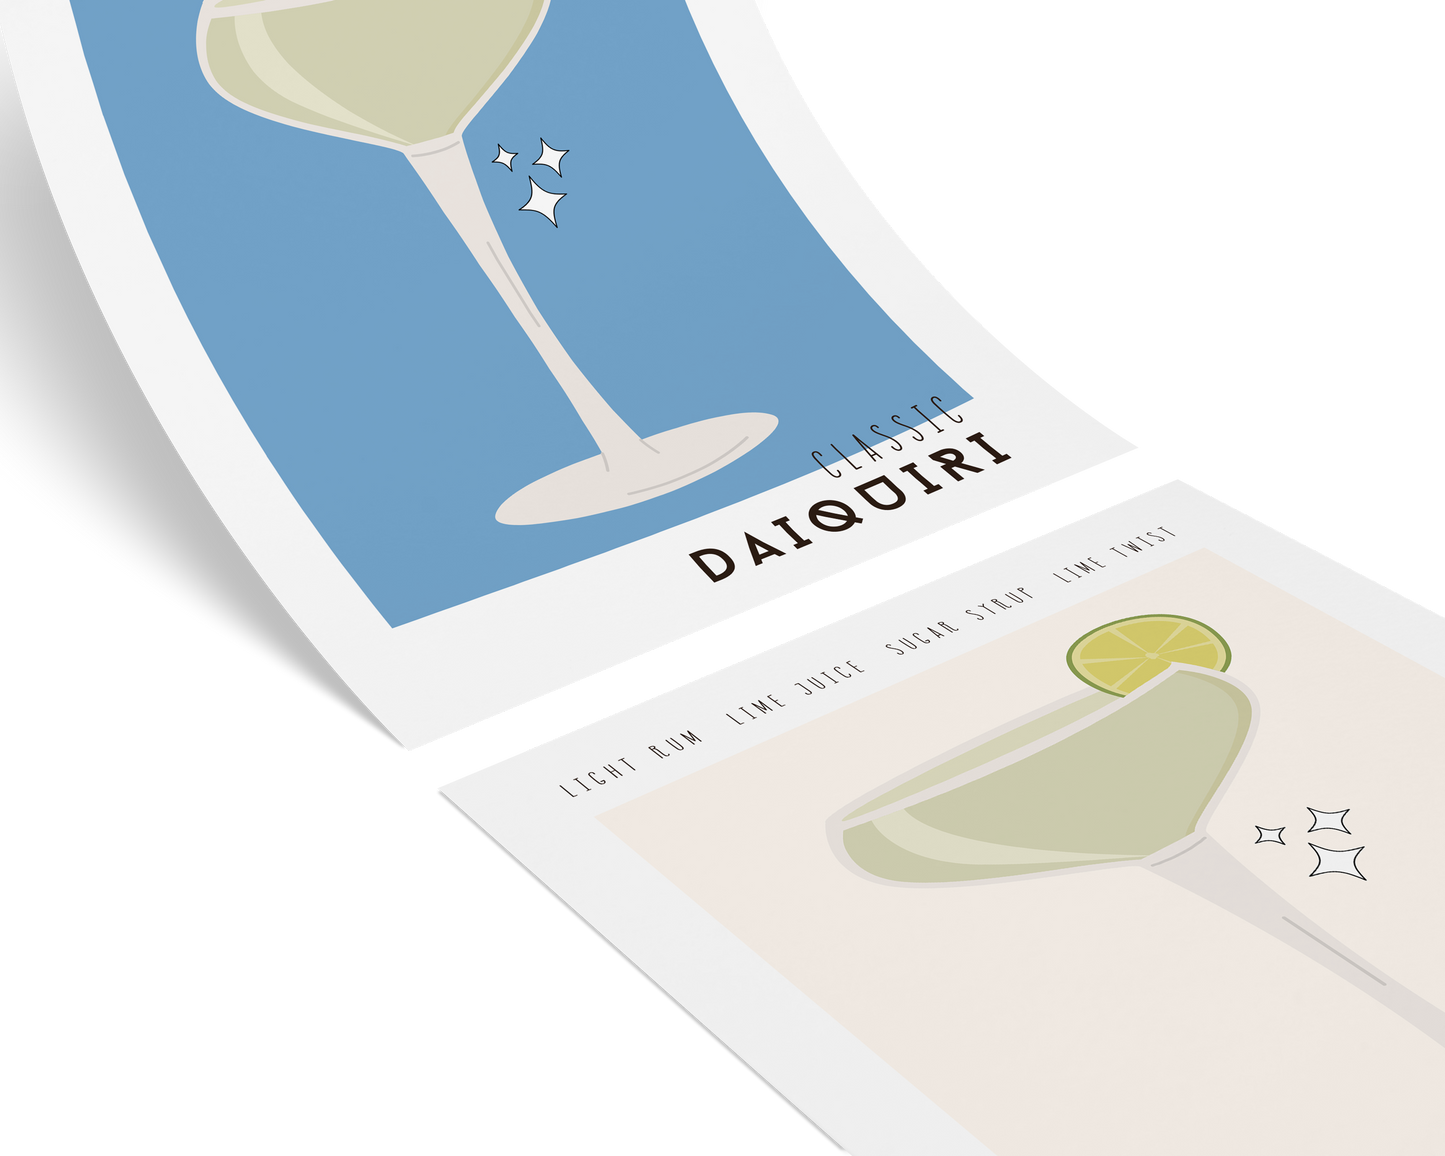 Daiquiri Cocktail Poster